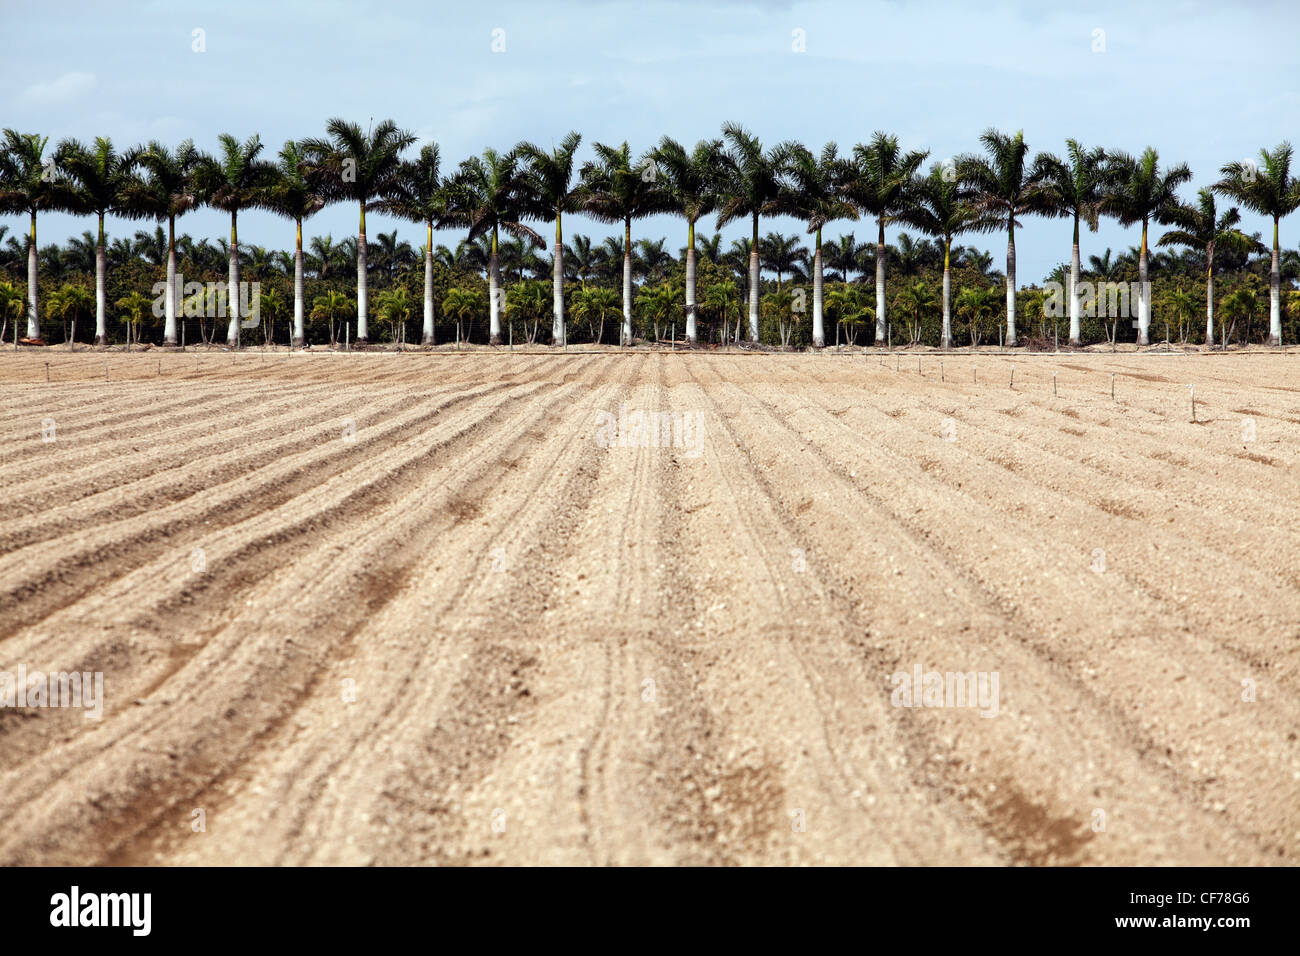 Palm trees line a barren plowed field, Homestead, Florida Stock Photo